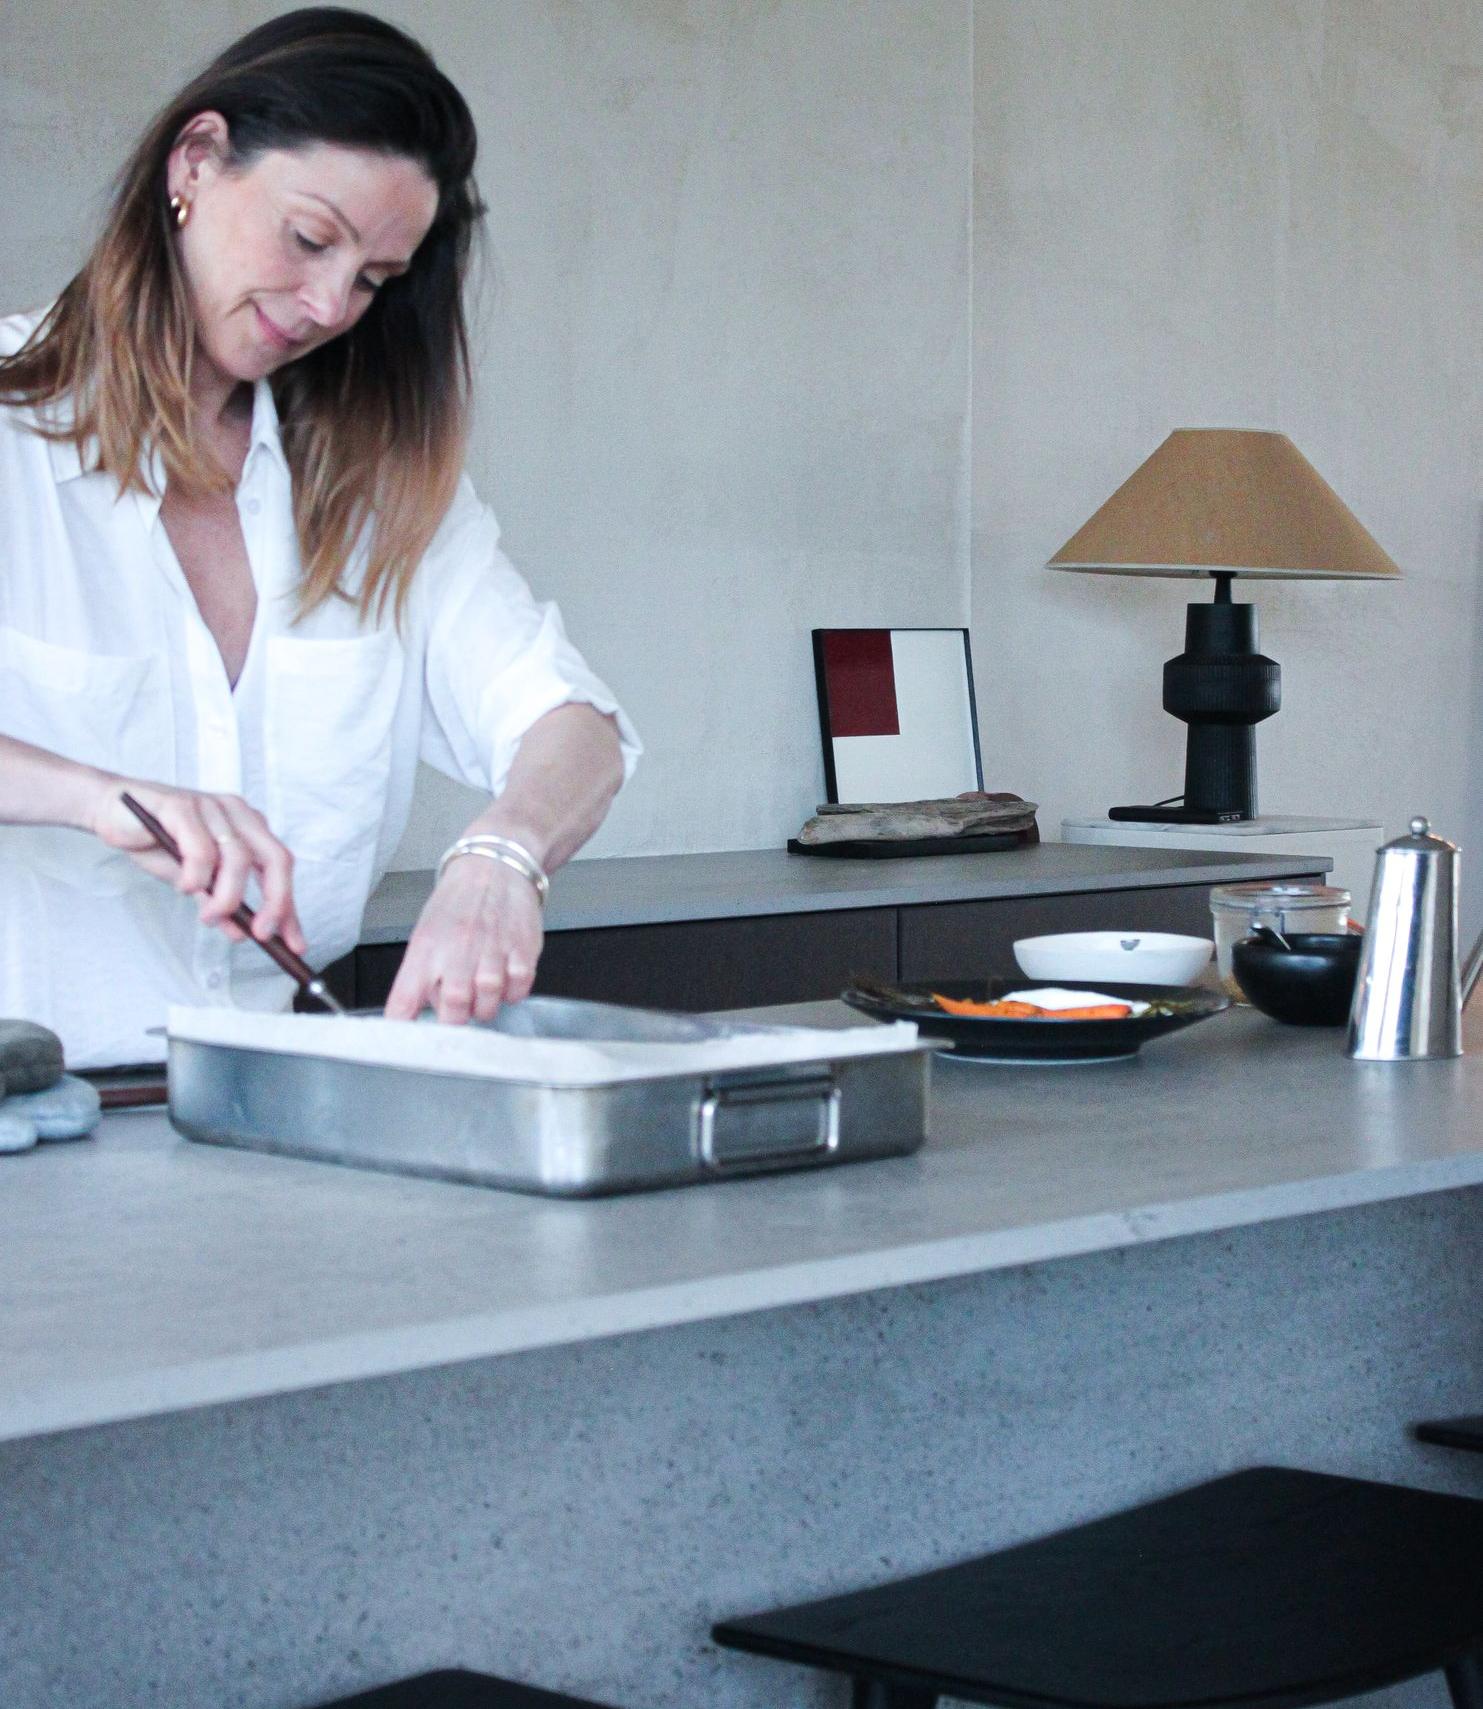 Live Light | Sofie Noyen in her kitchen creating a dish